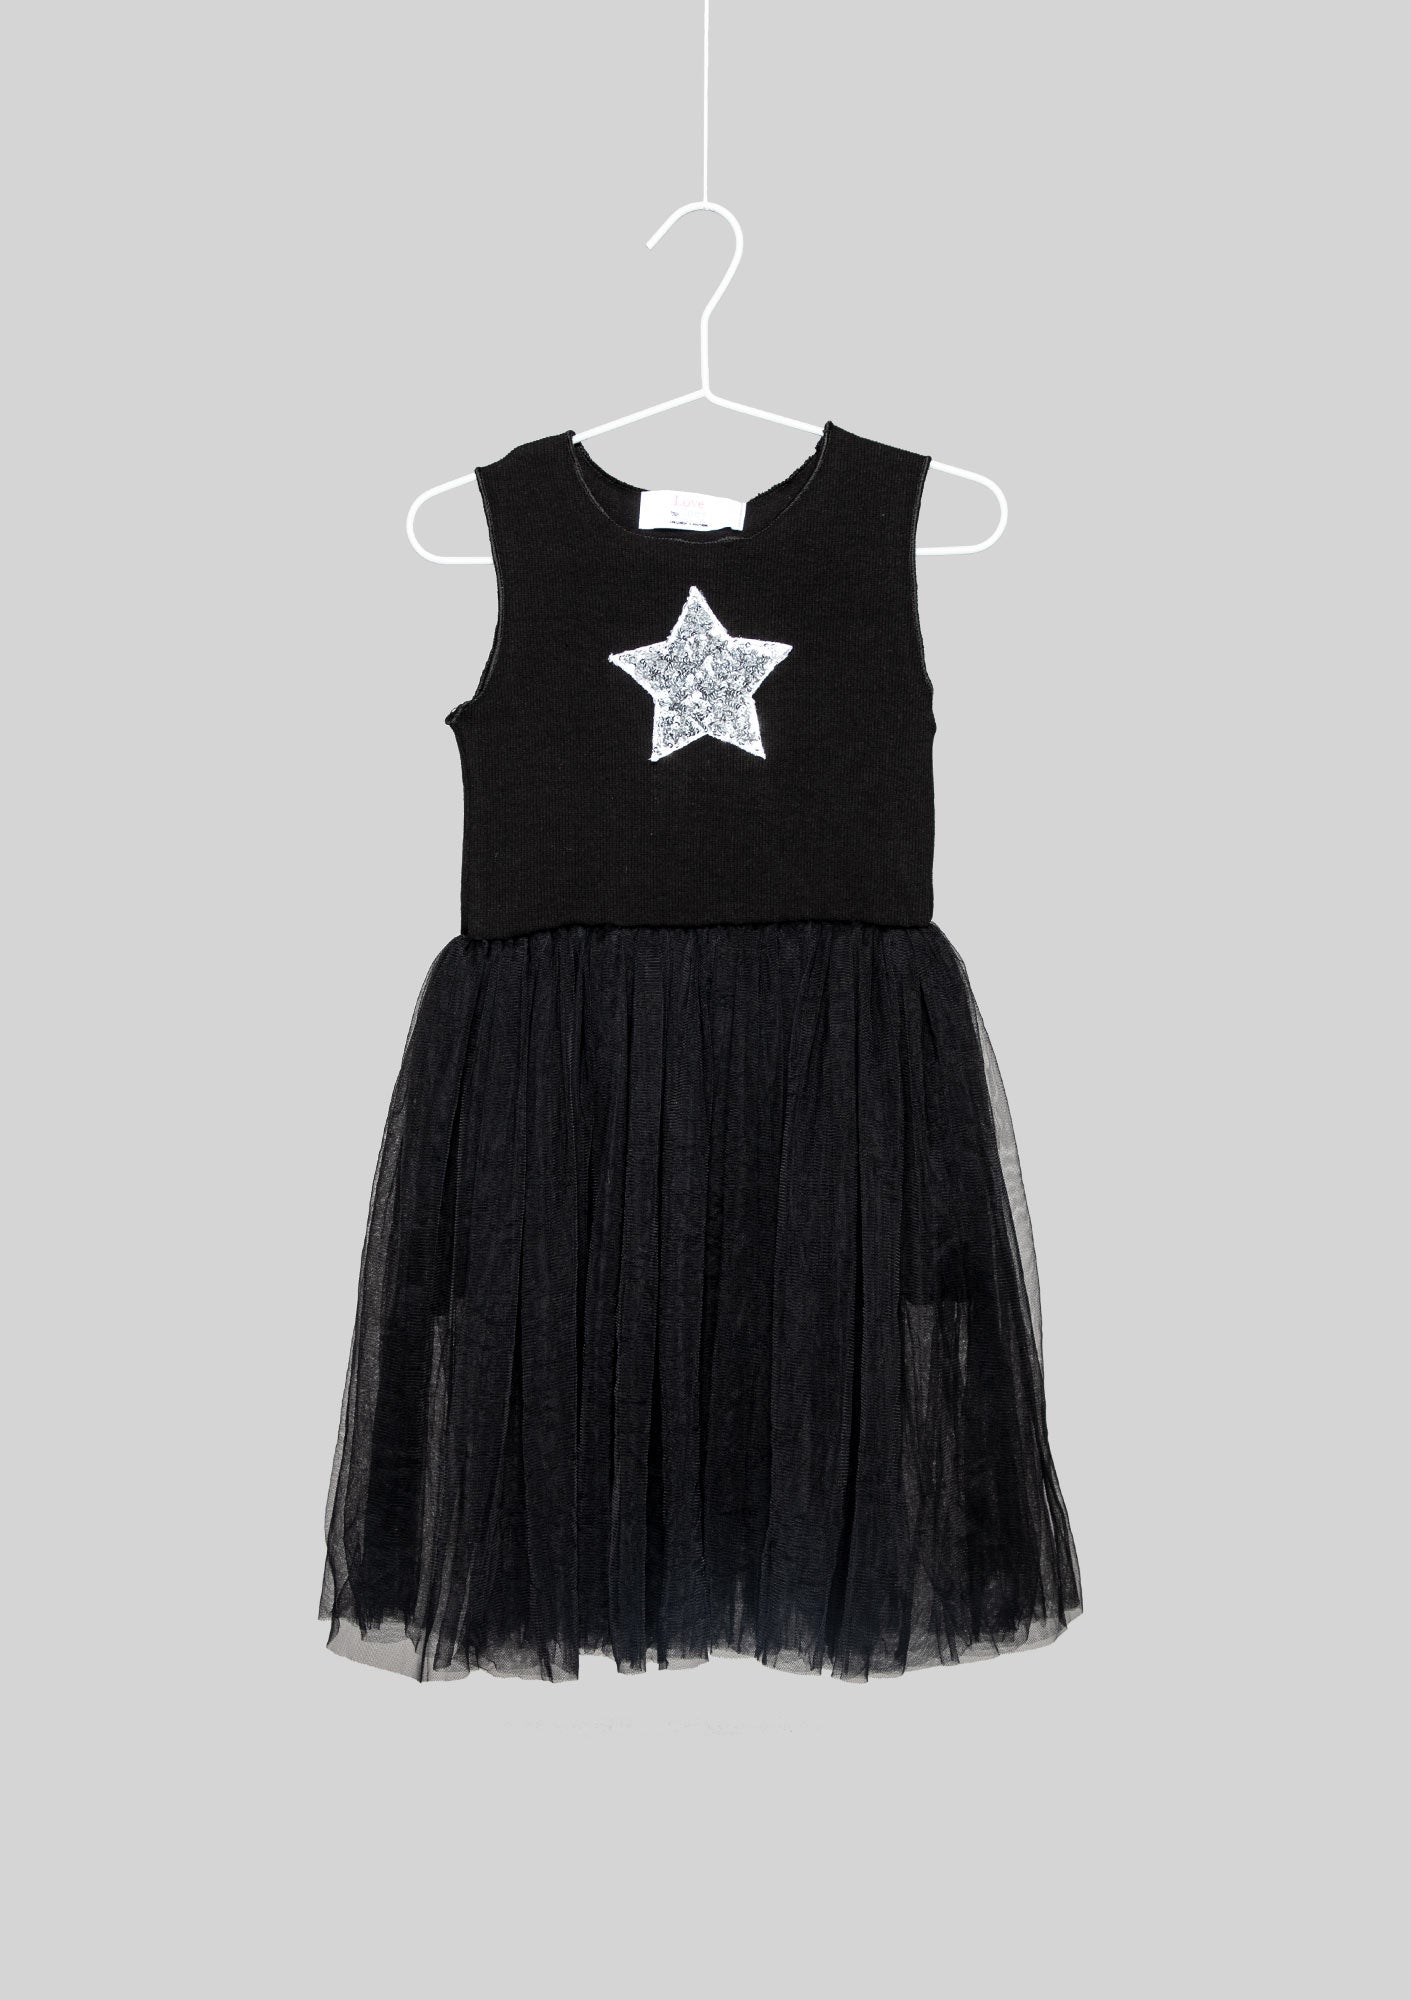 Sequined Star Black Tank Dress